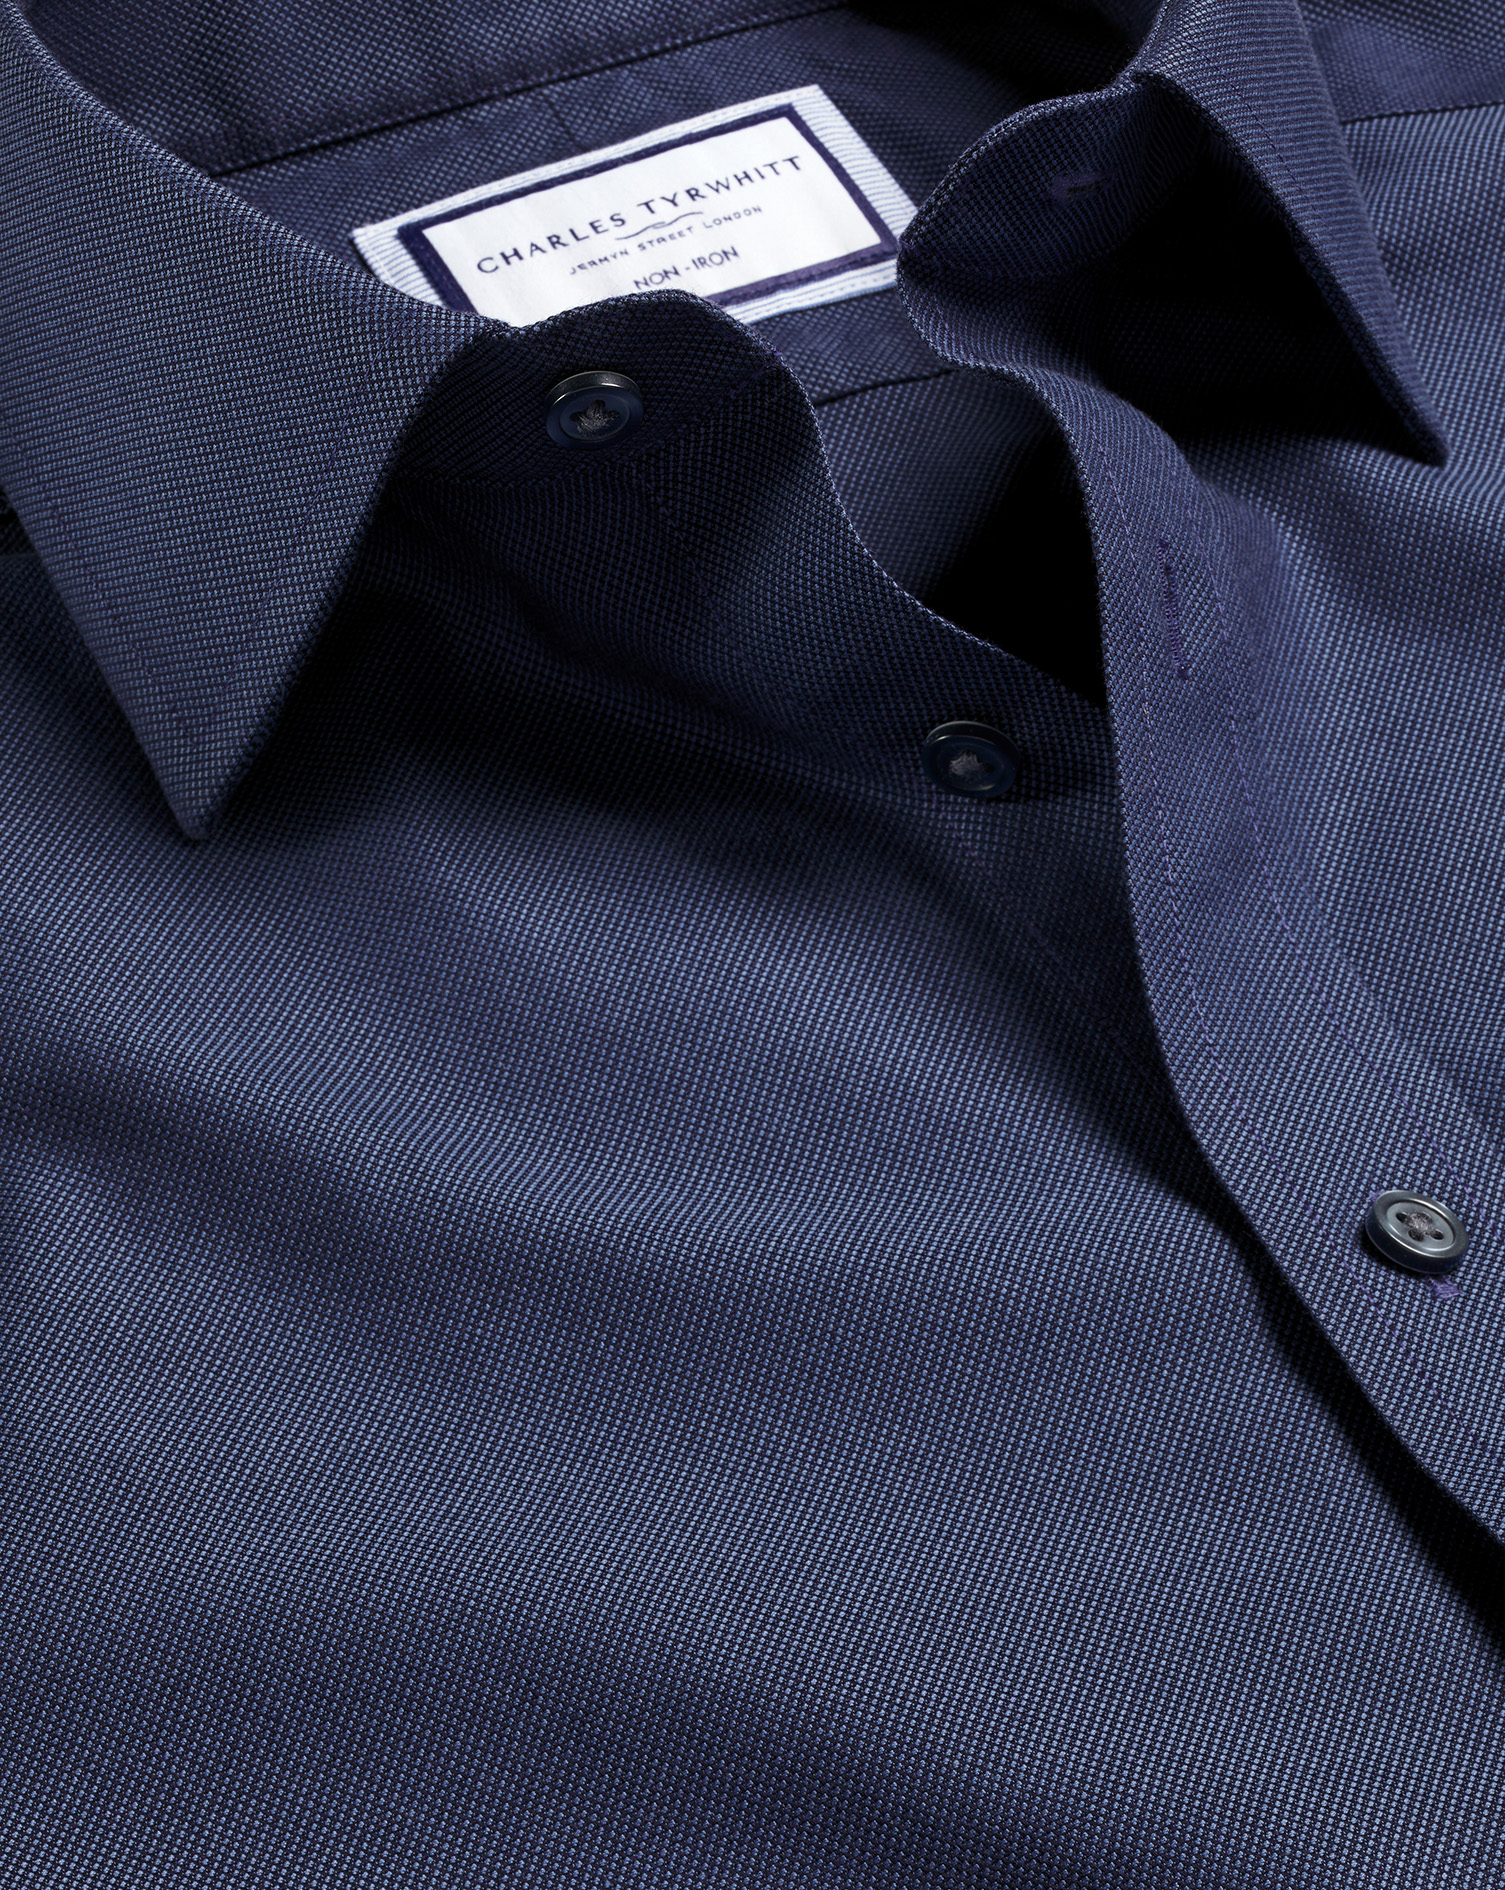 Men's Charles Tyrwhitt Non-Iron Royal Oxford Dress Shirt - French Blue French Cuff Size 16/35 Cotton